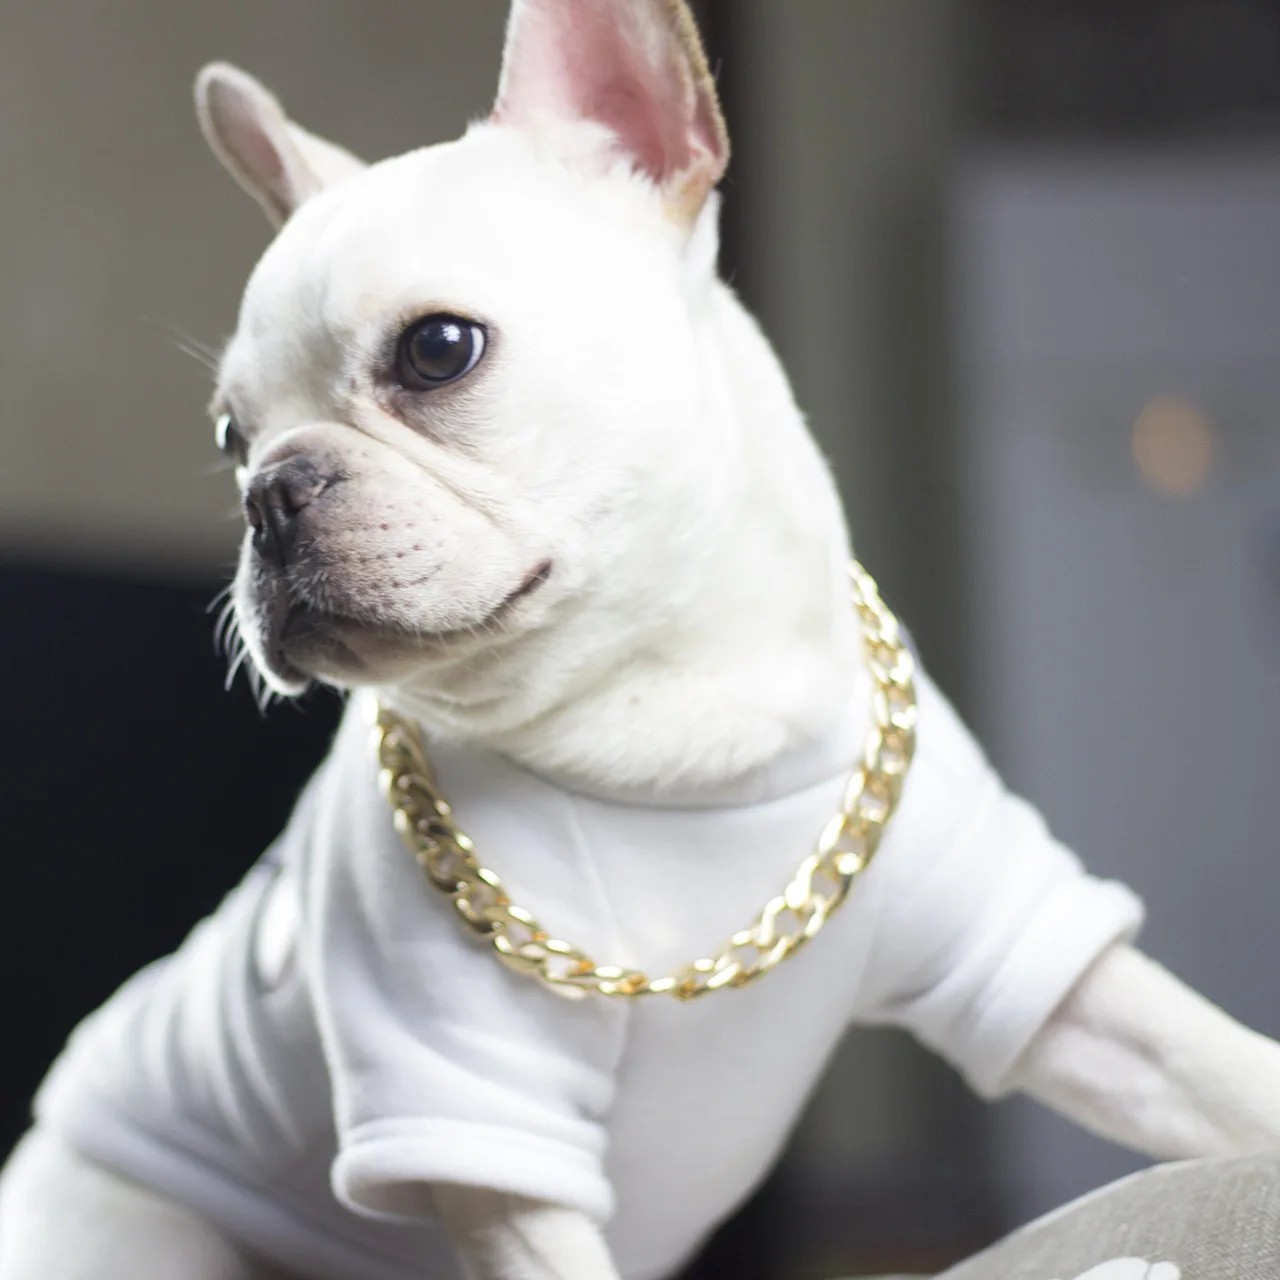 Tebru Dog Choke Chain,Dog Choke Collar,3 Sizes New Gold/Black Metal Snake  Chain Twisted Necklace Pet Dog Show Training Choker Collars 